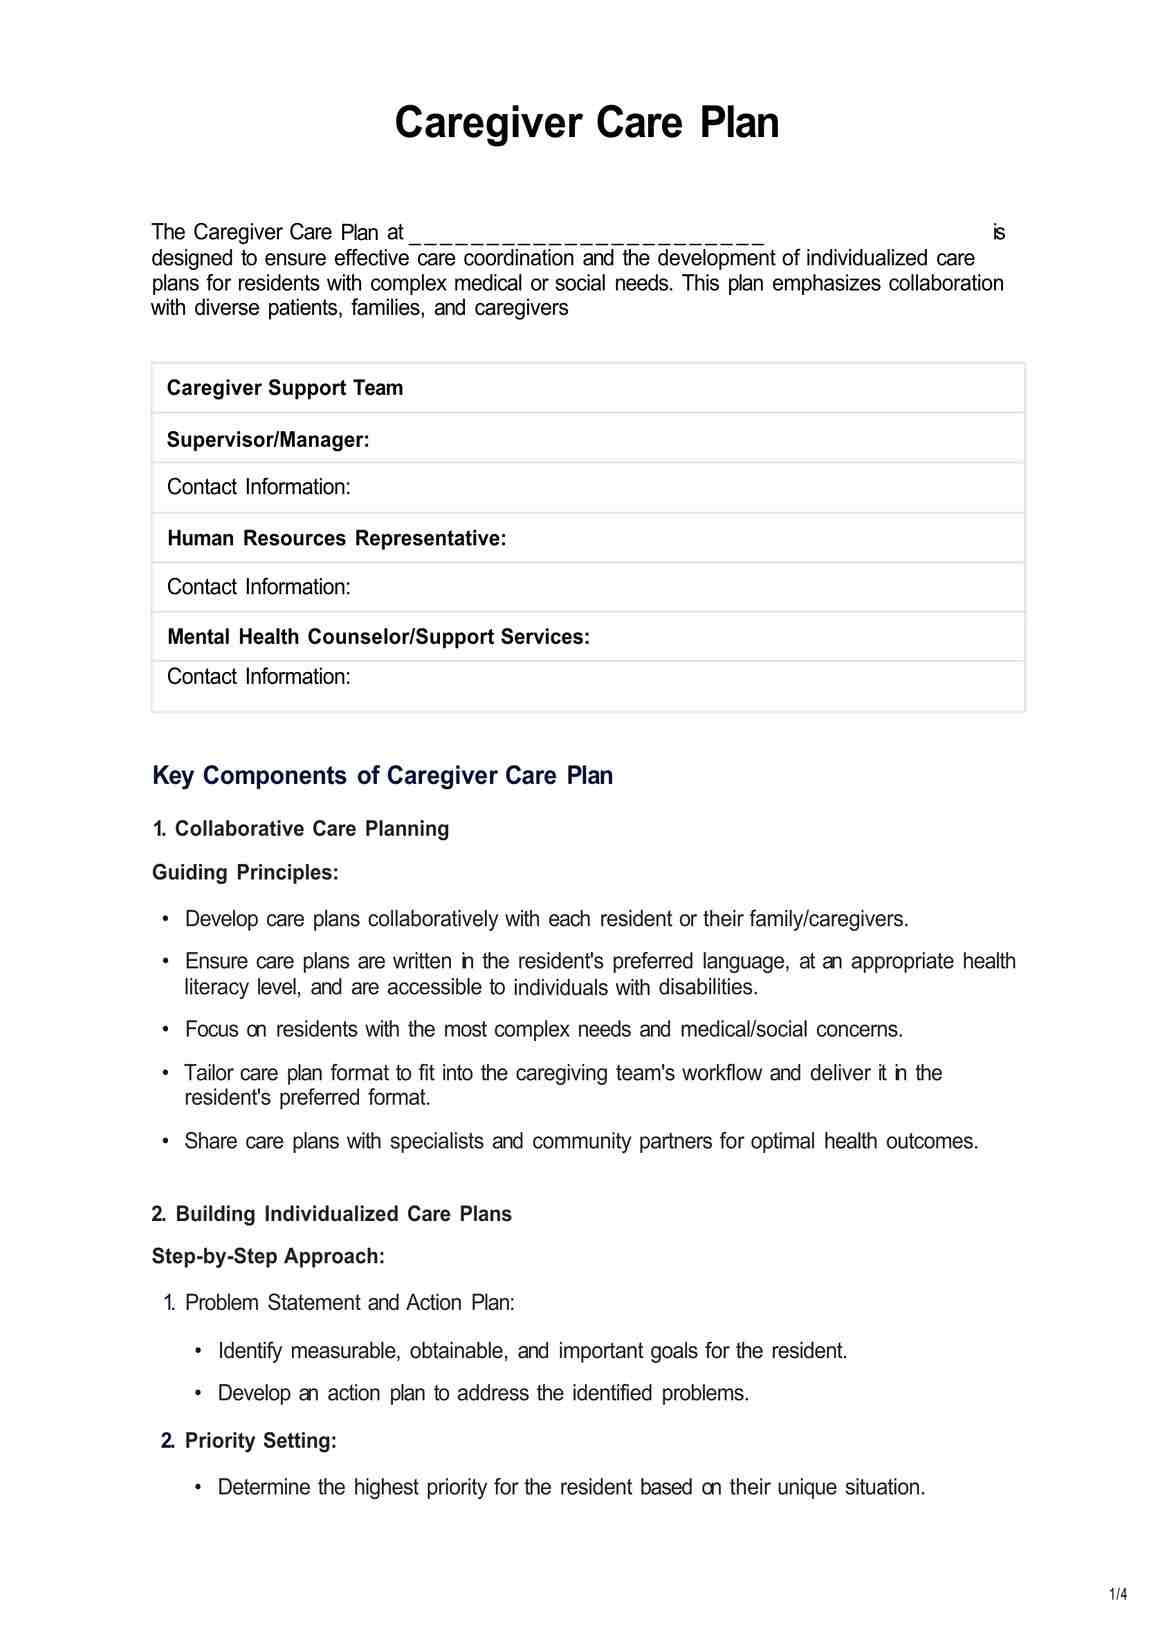 Caregiver Care Plan PDF Example